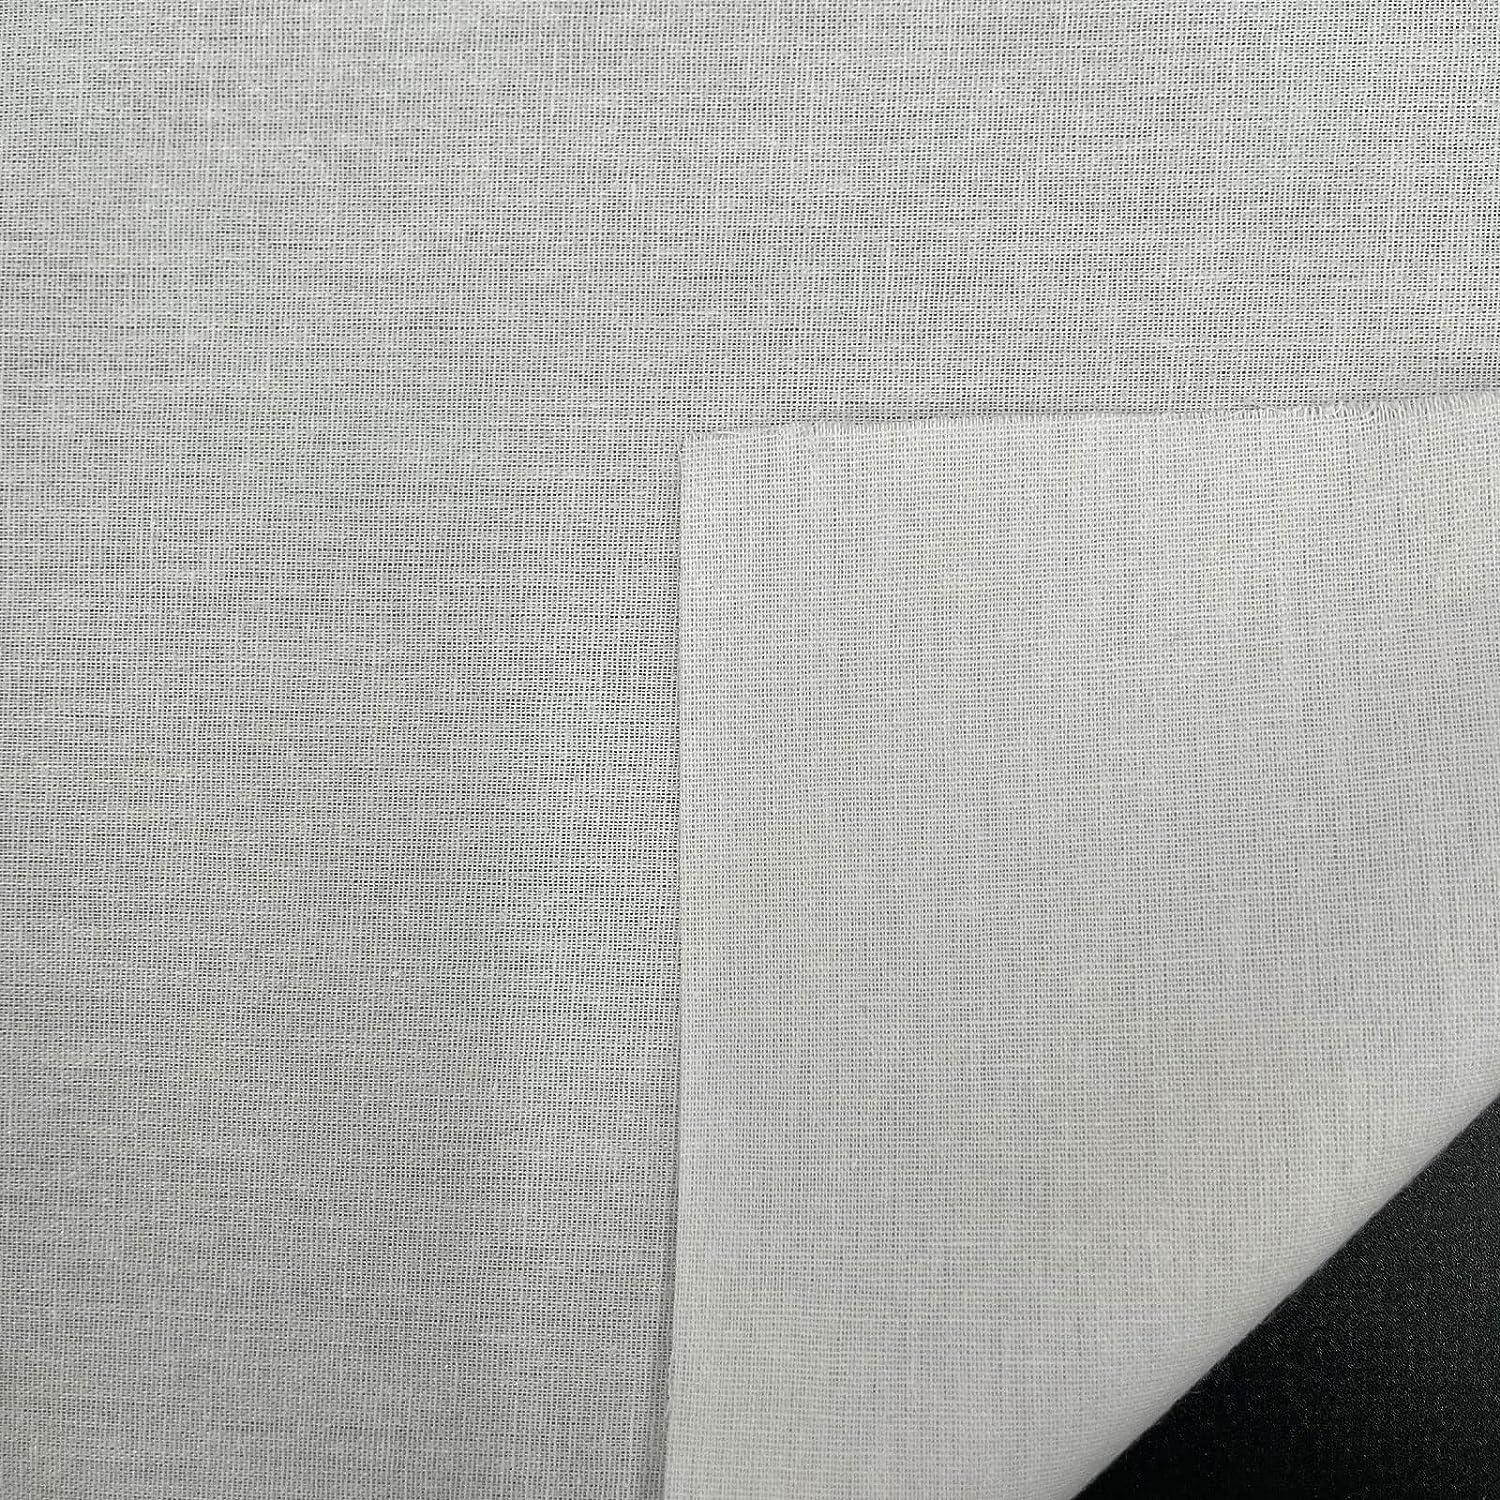 PLANTIONAL Medium Weight White Iron-On Non-Woven Fusible Interfacing: 11.6  x